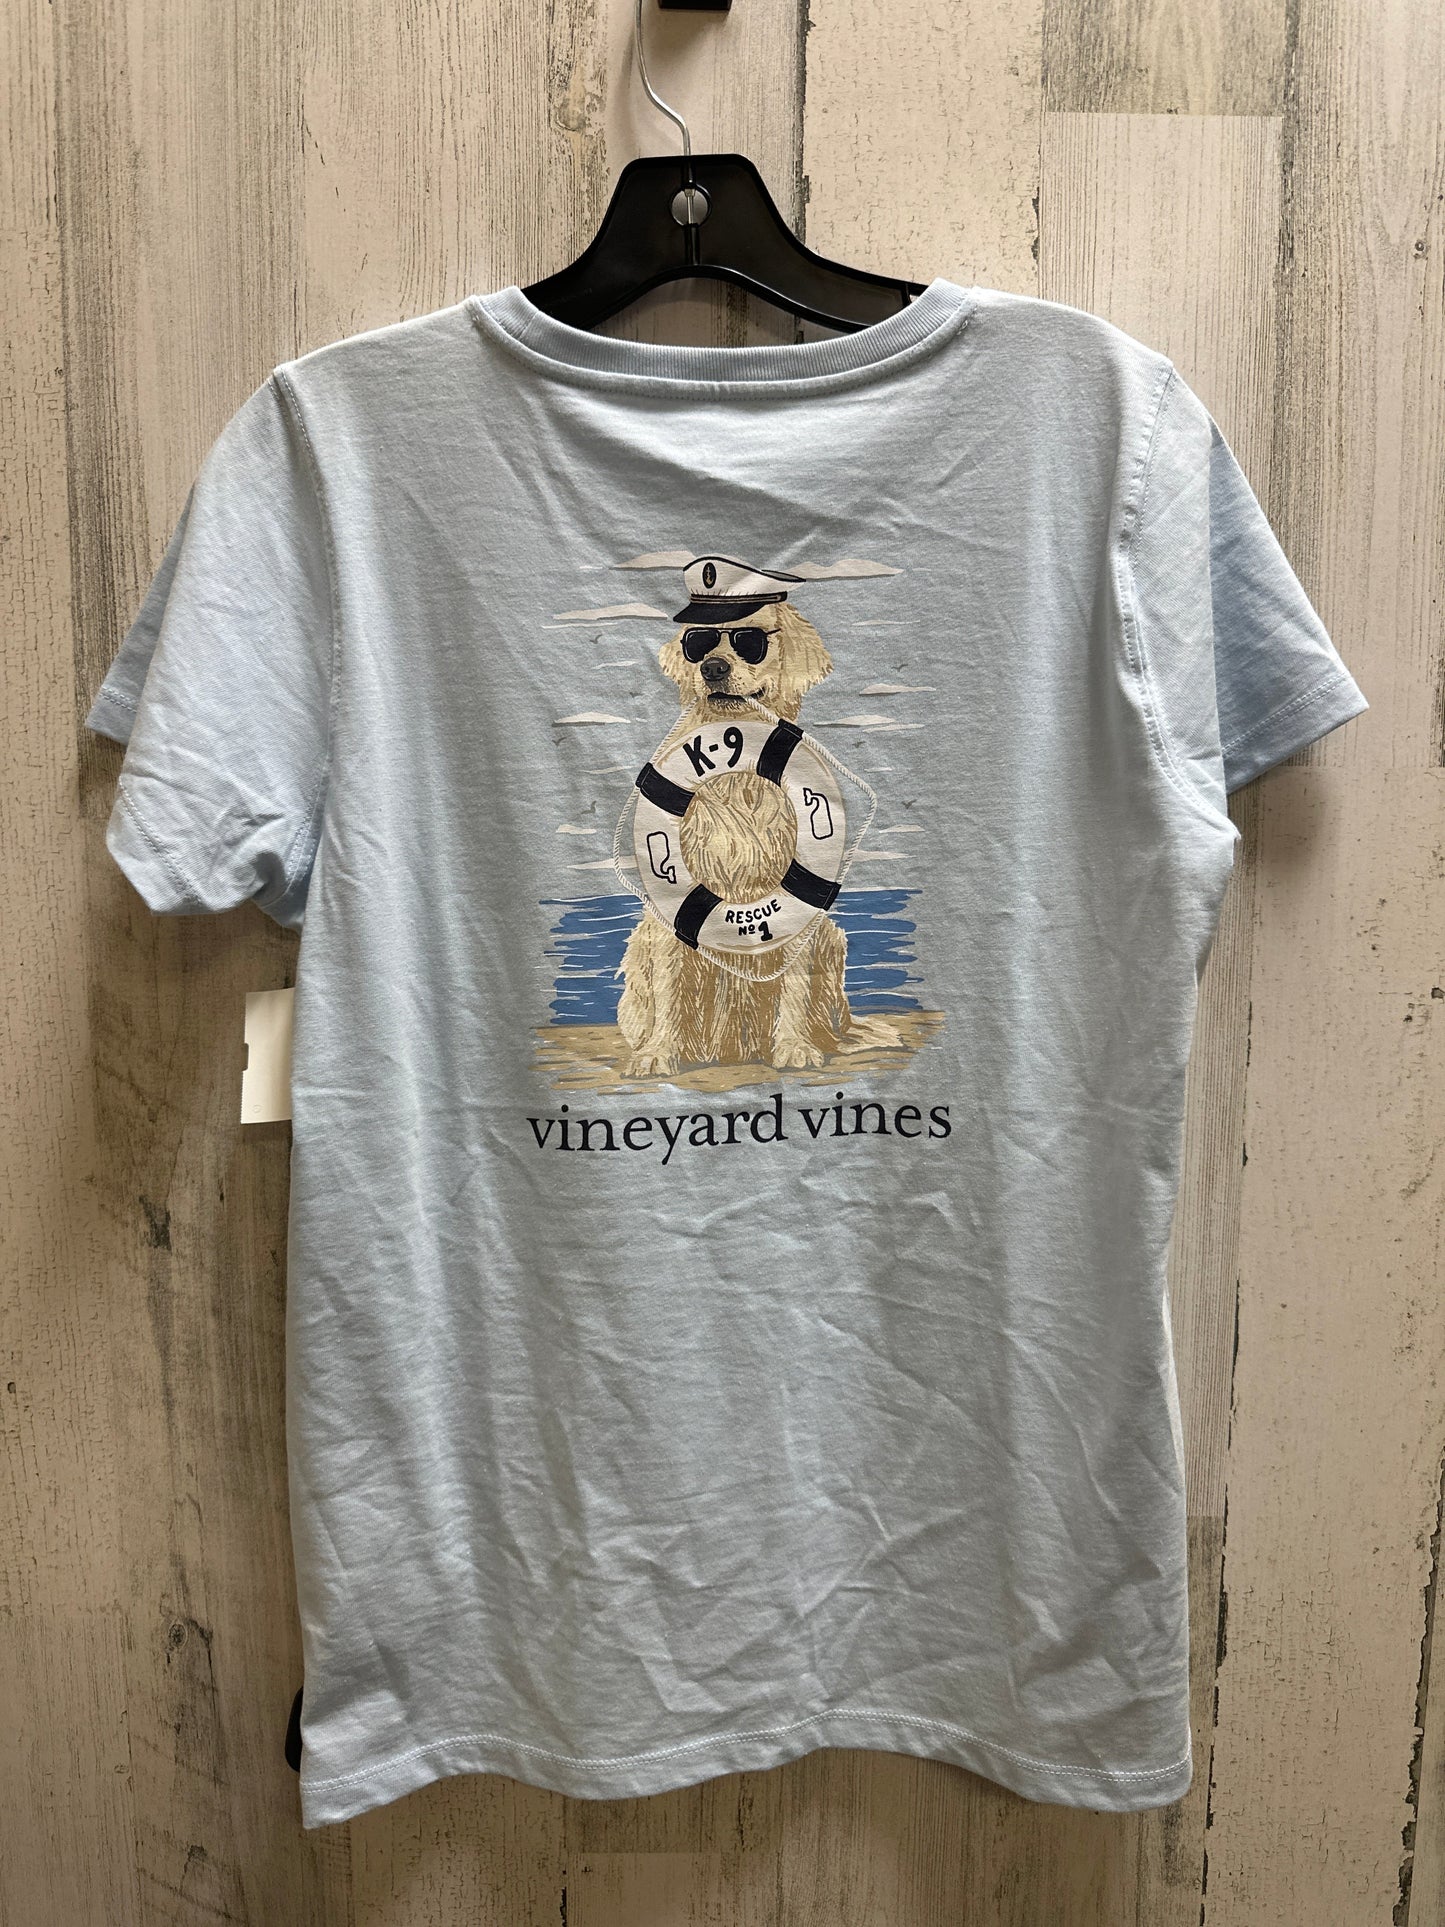 Blue Top Short Sleeve Vineyard Vines, Size S